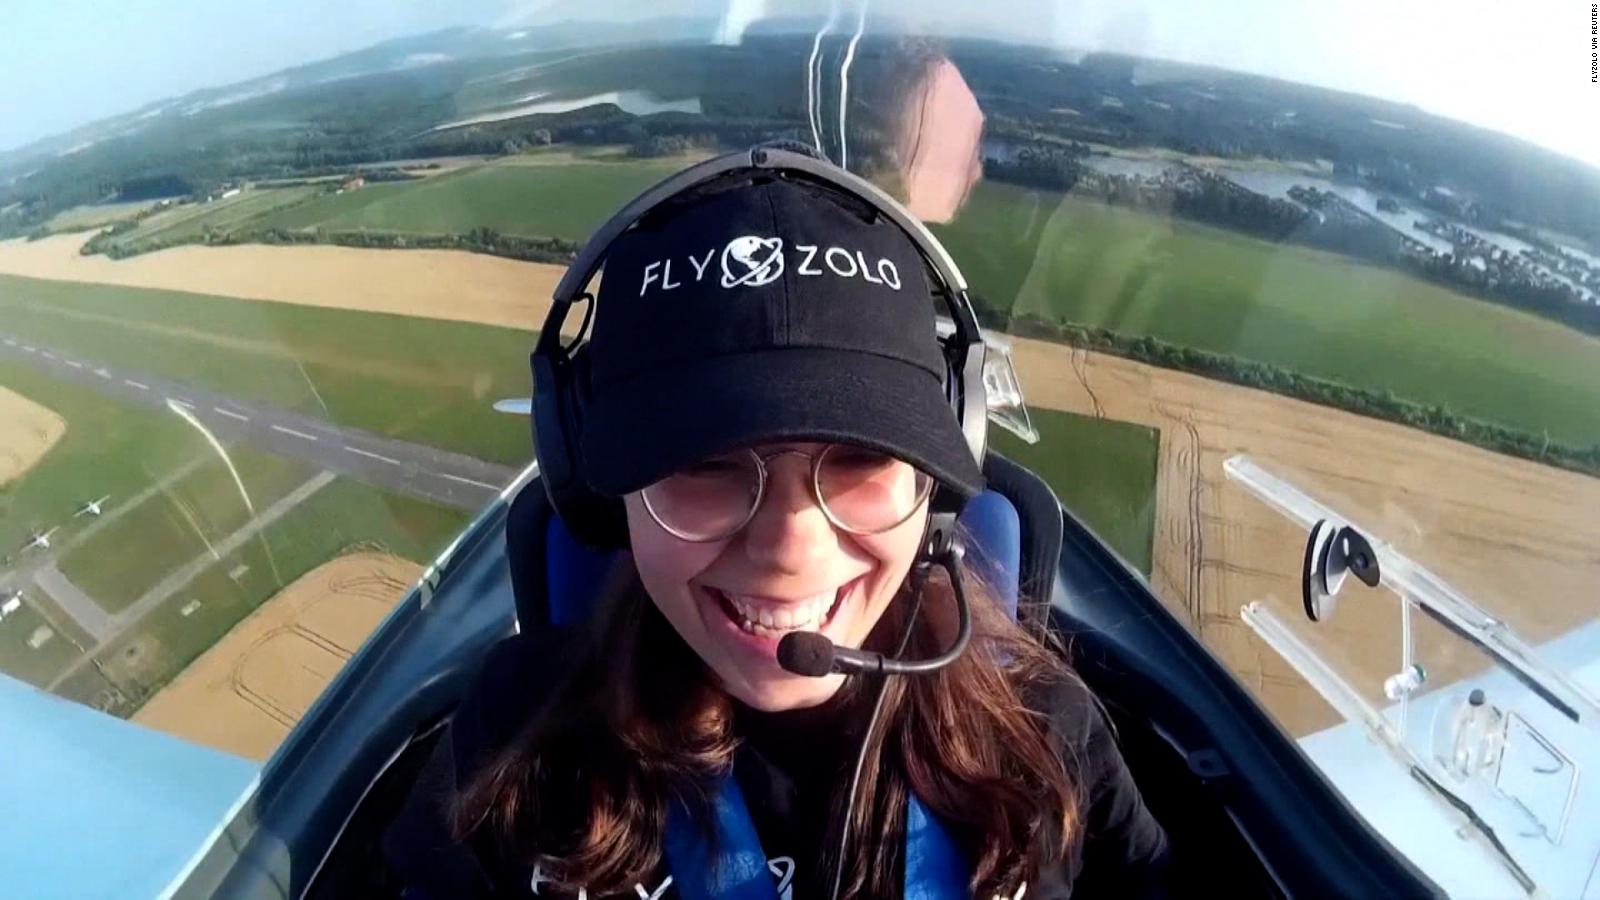 Teen aviator Zara Rutherford lands historic flight in Seoul | CNN Travel